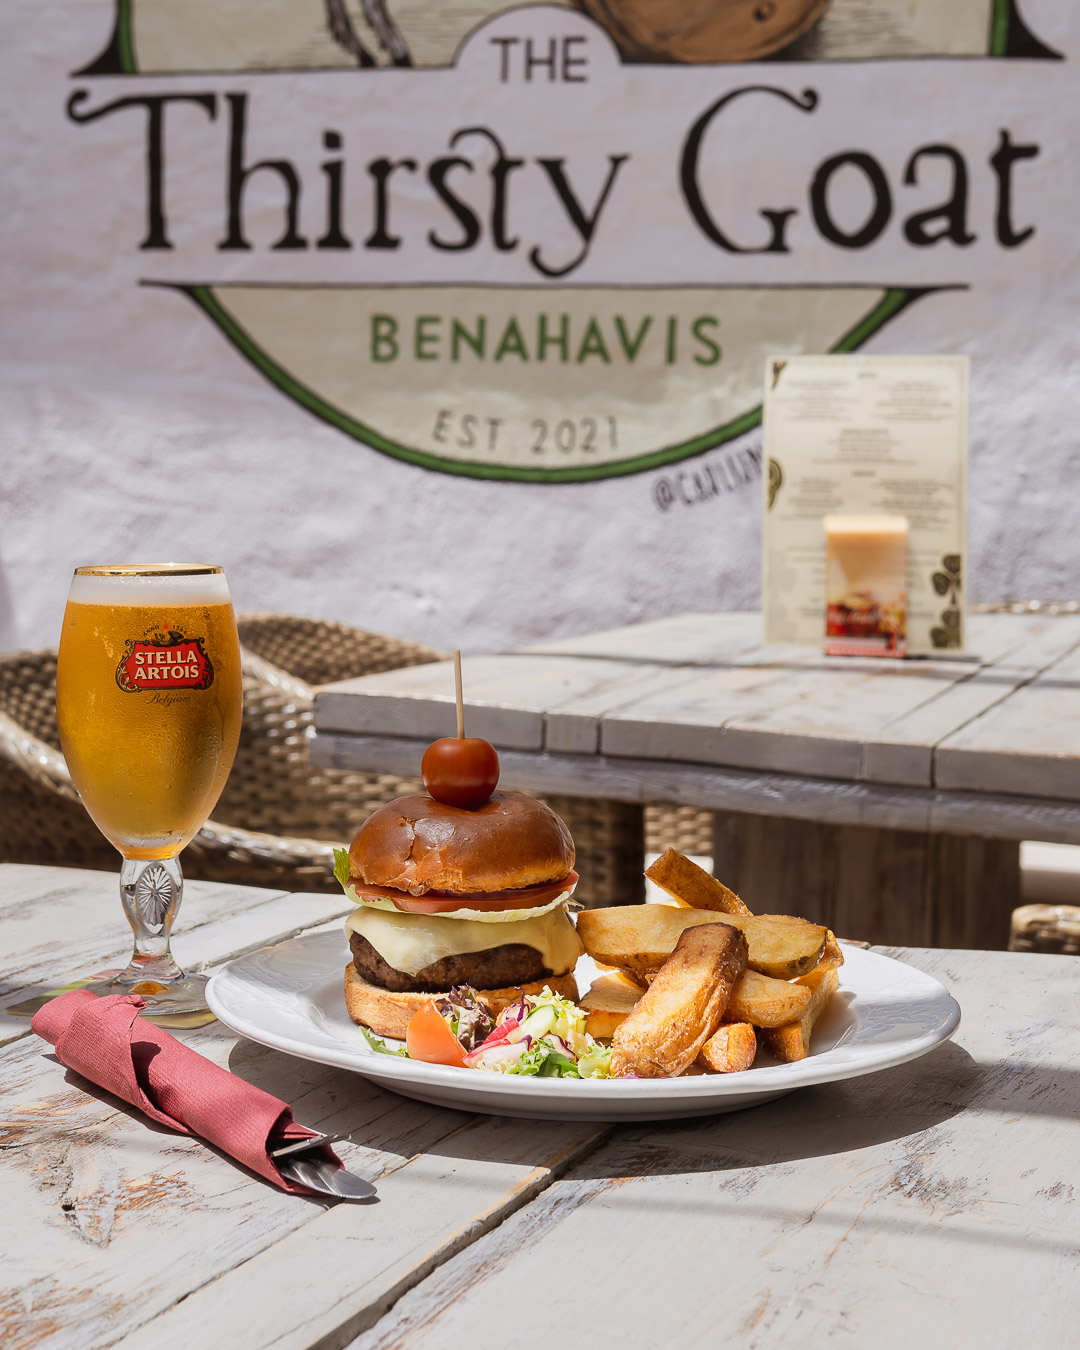 The Thirsty Goat Benahavis